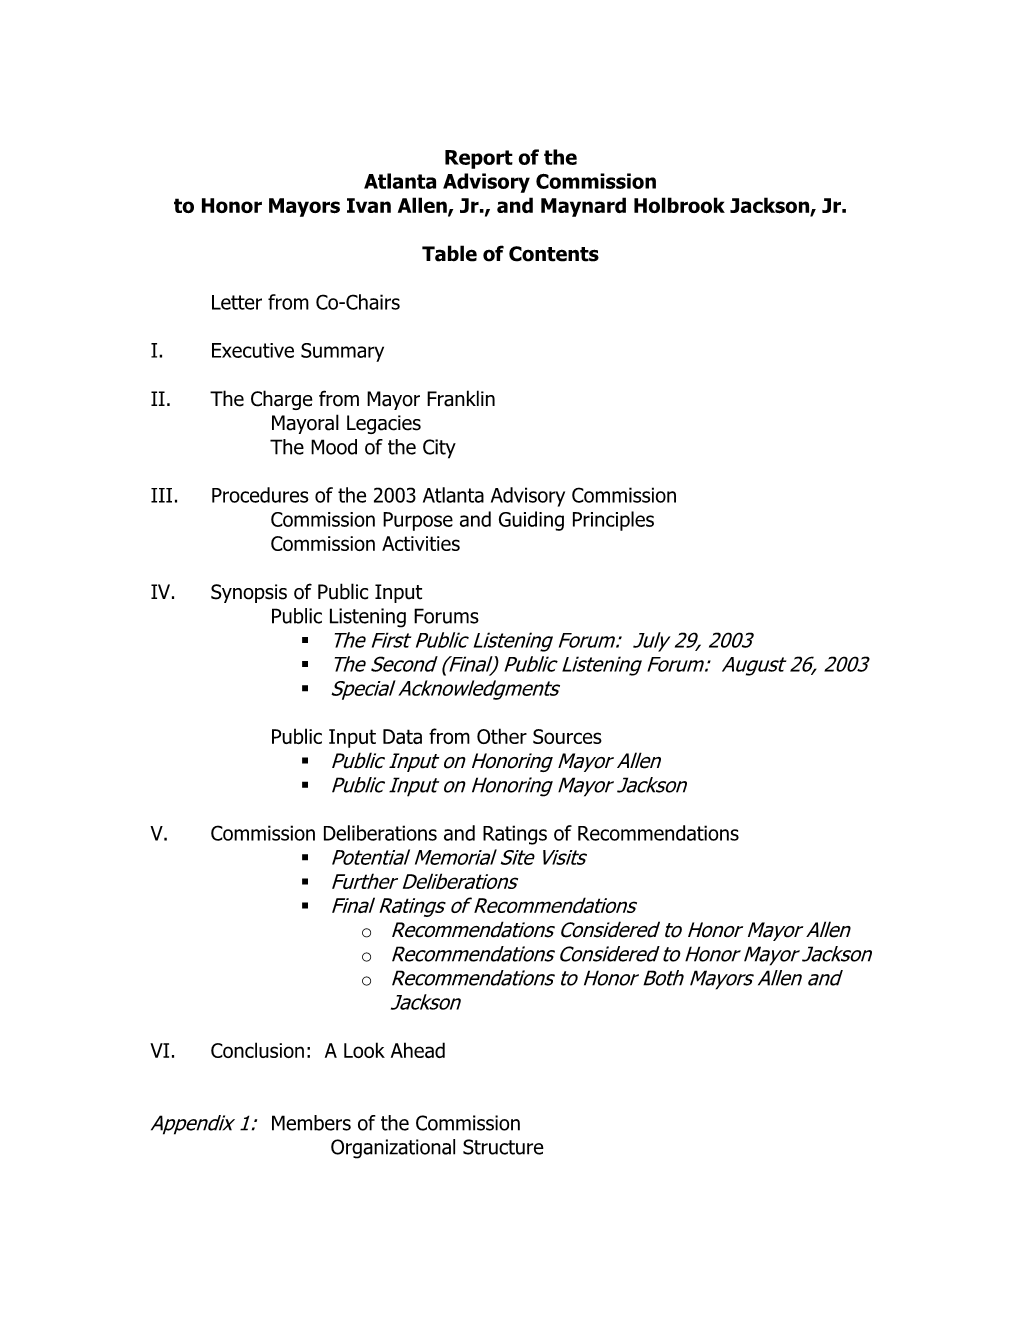 Report of the Atlanta Advisory Commission to Honor Mayors Ivan Allen, Jr., and Maynard Holbrook Jackson, Jr